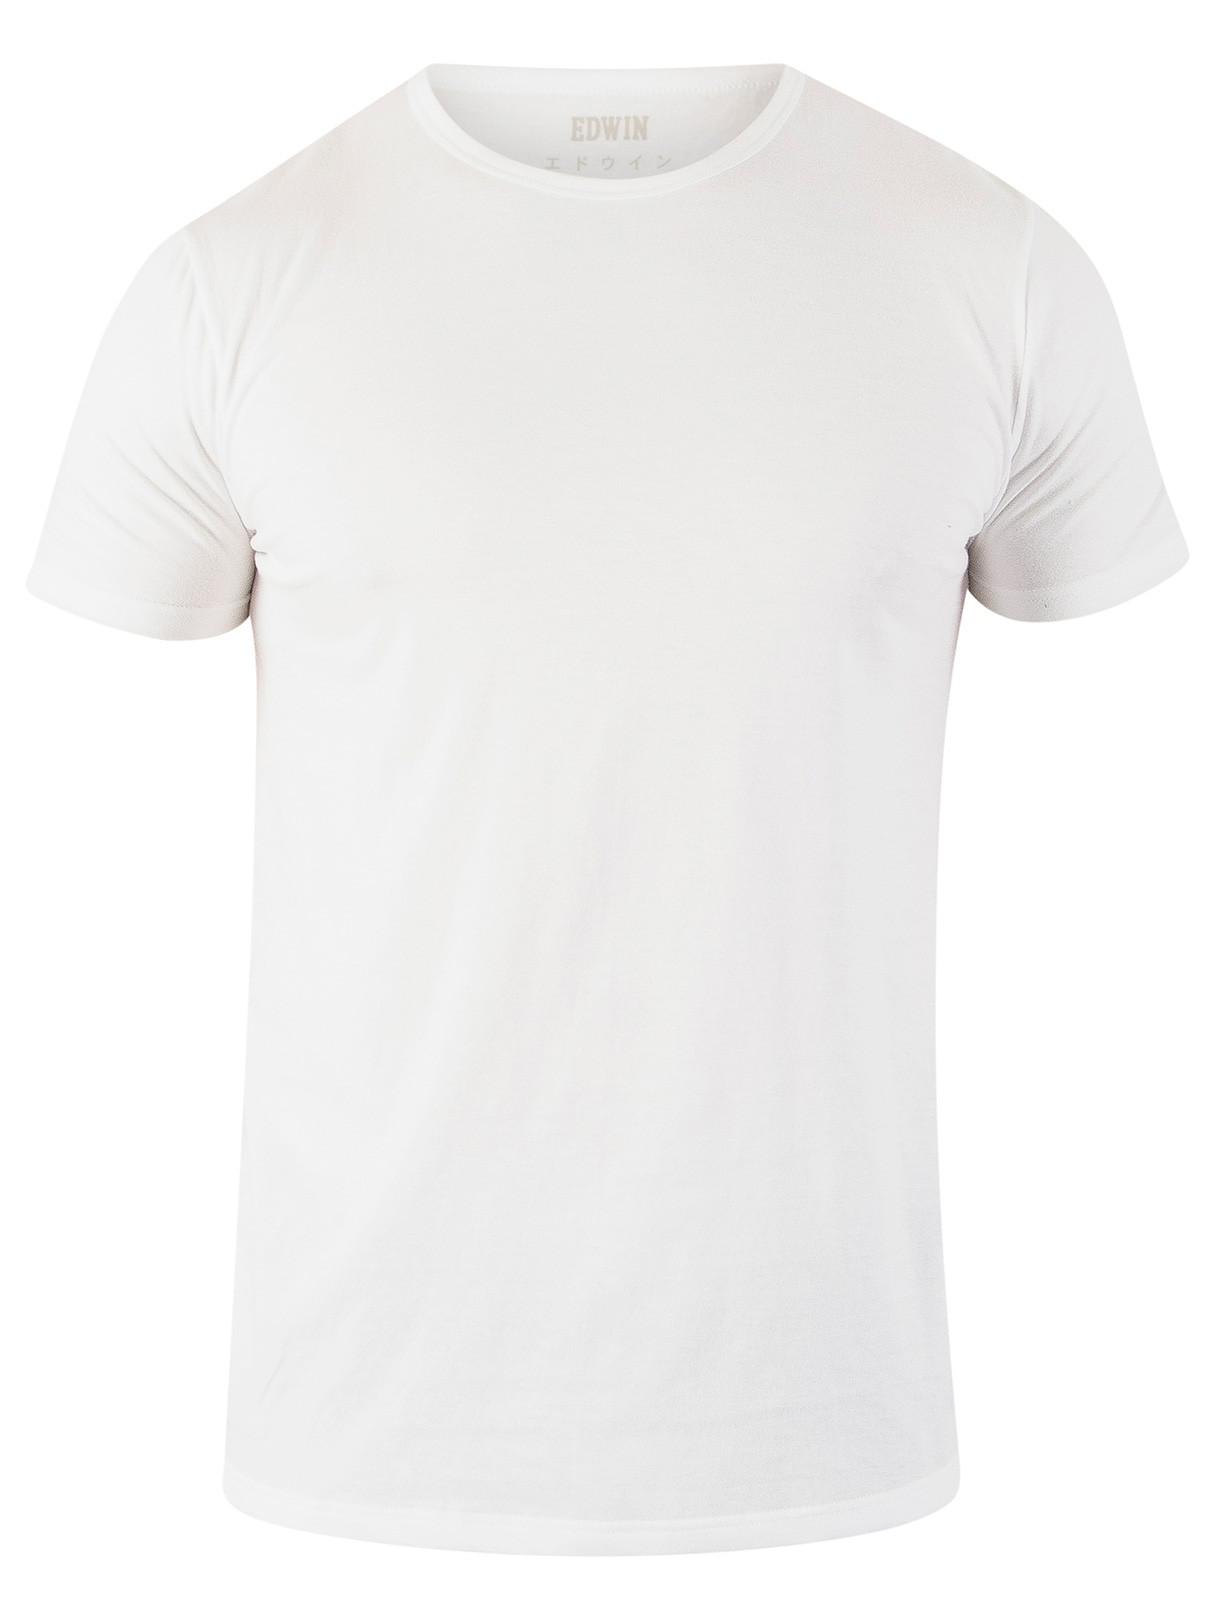 Lyst - Edwin White 2 Pack Plain T-shirts in White for Men